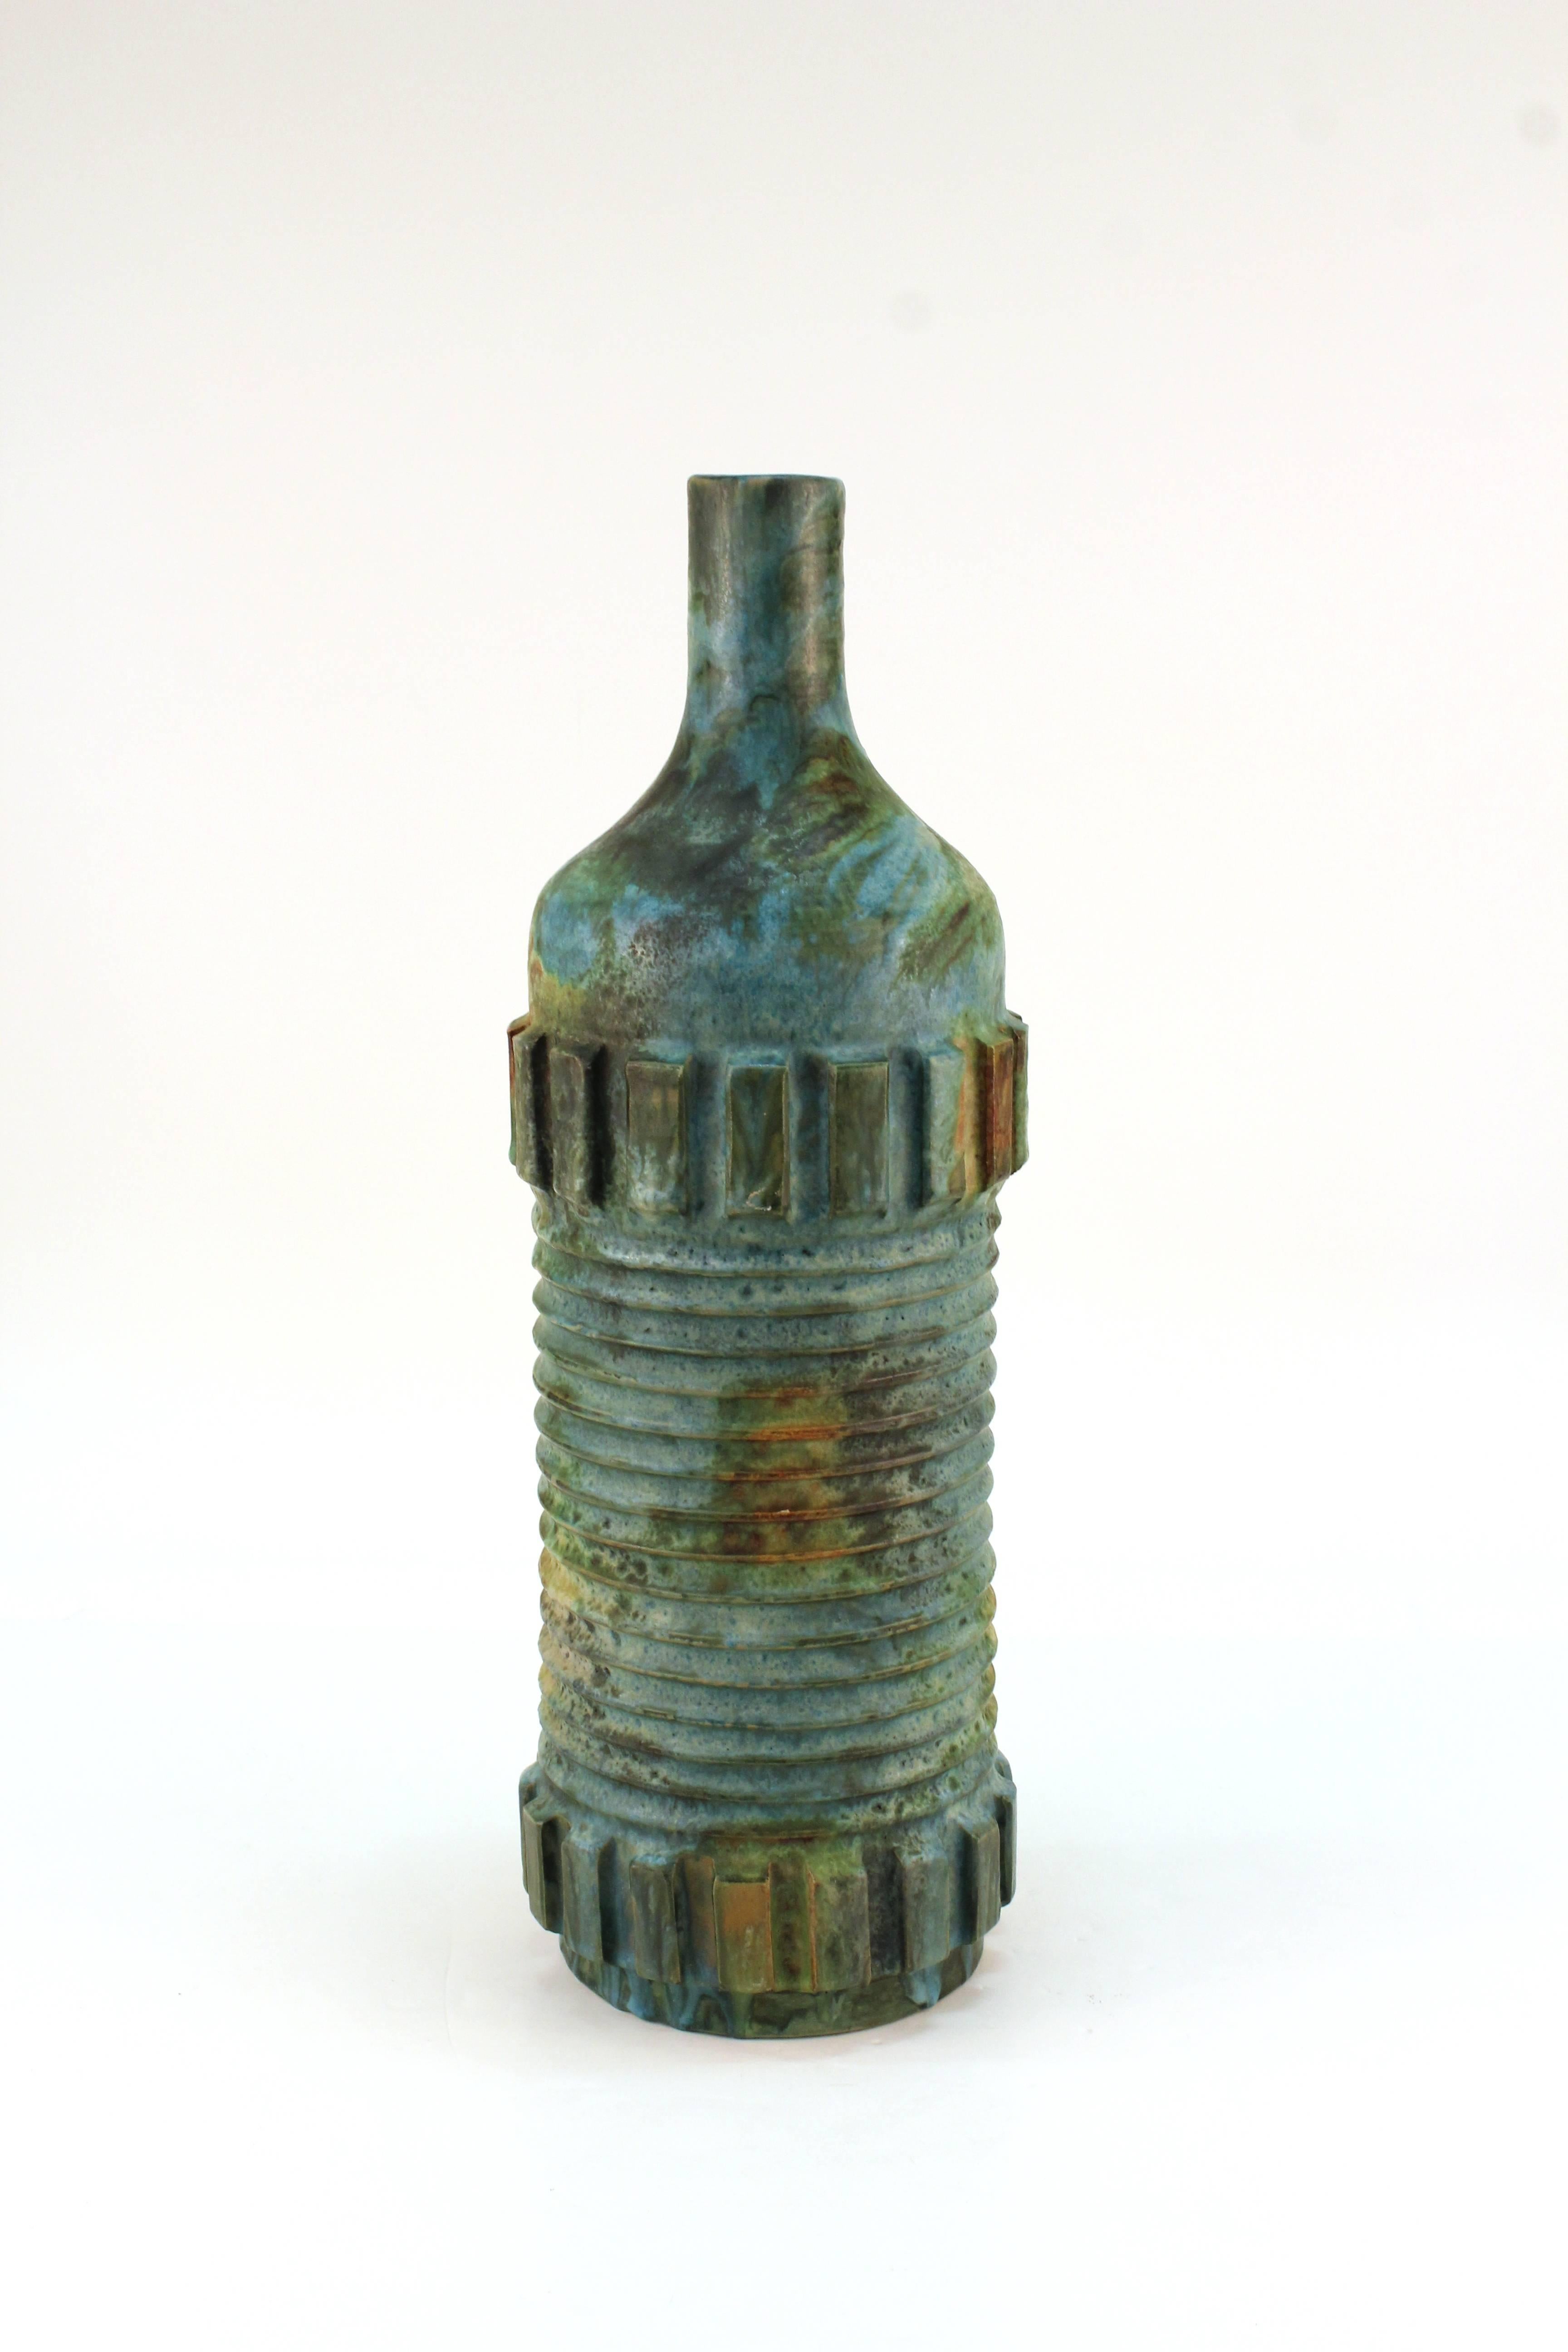 A ceramic bottle vase designed by Alvino Bagni for Raymor in 1960s, Italy. Glazed in Bagni's unique "sea garden" colors. In excellent condition.